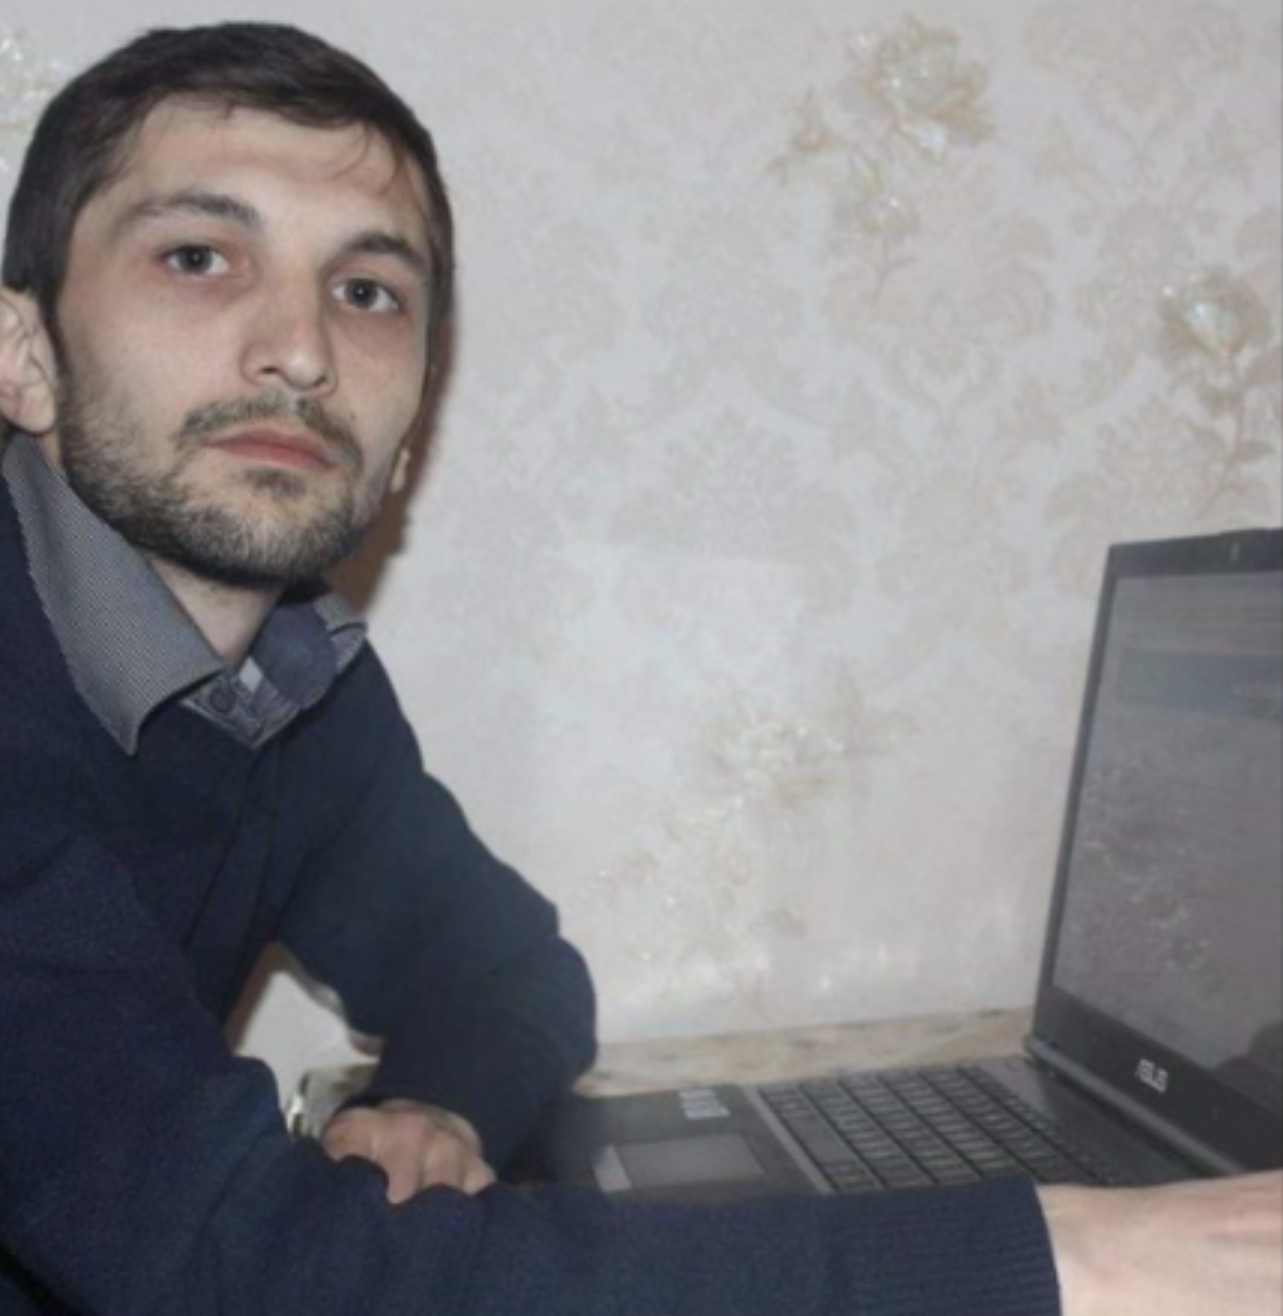 Polad Aslanov sits down to use his computer. (Courtesy of Gulmira Aslanova and Fuad Hasanov)